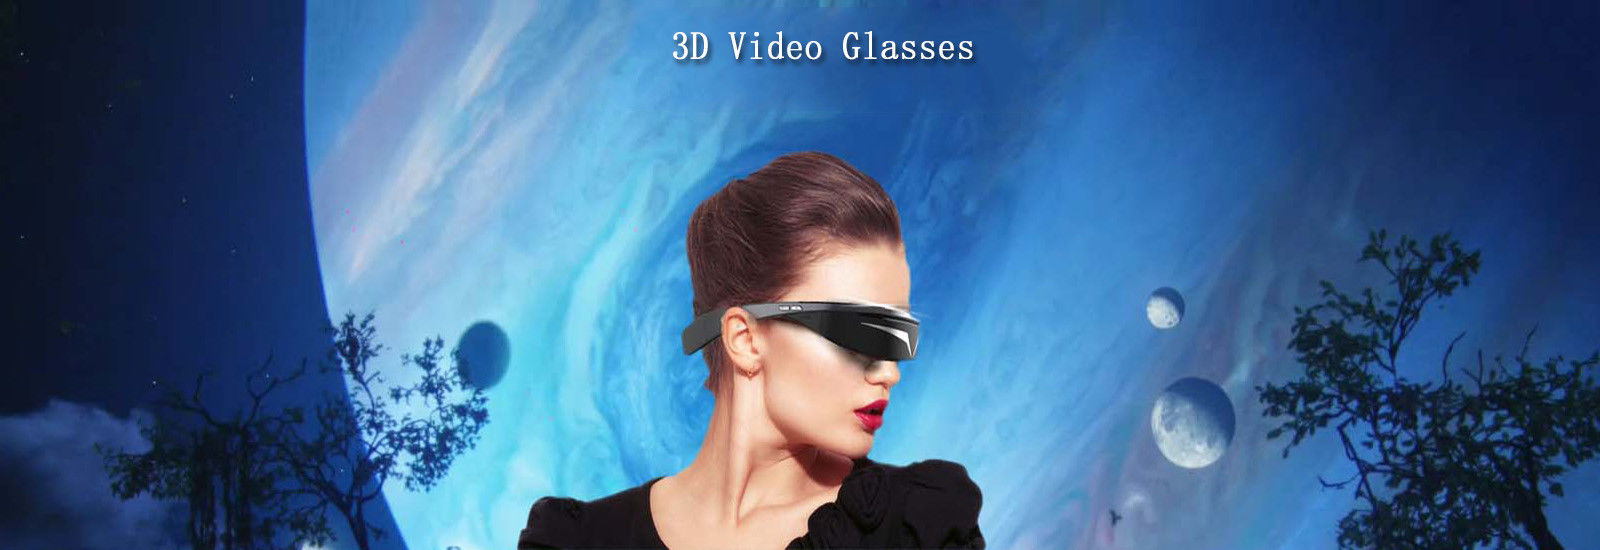 FPV Video Glasses